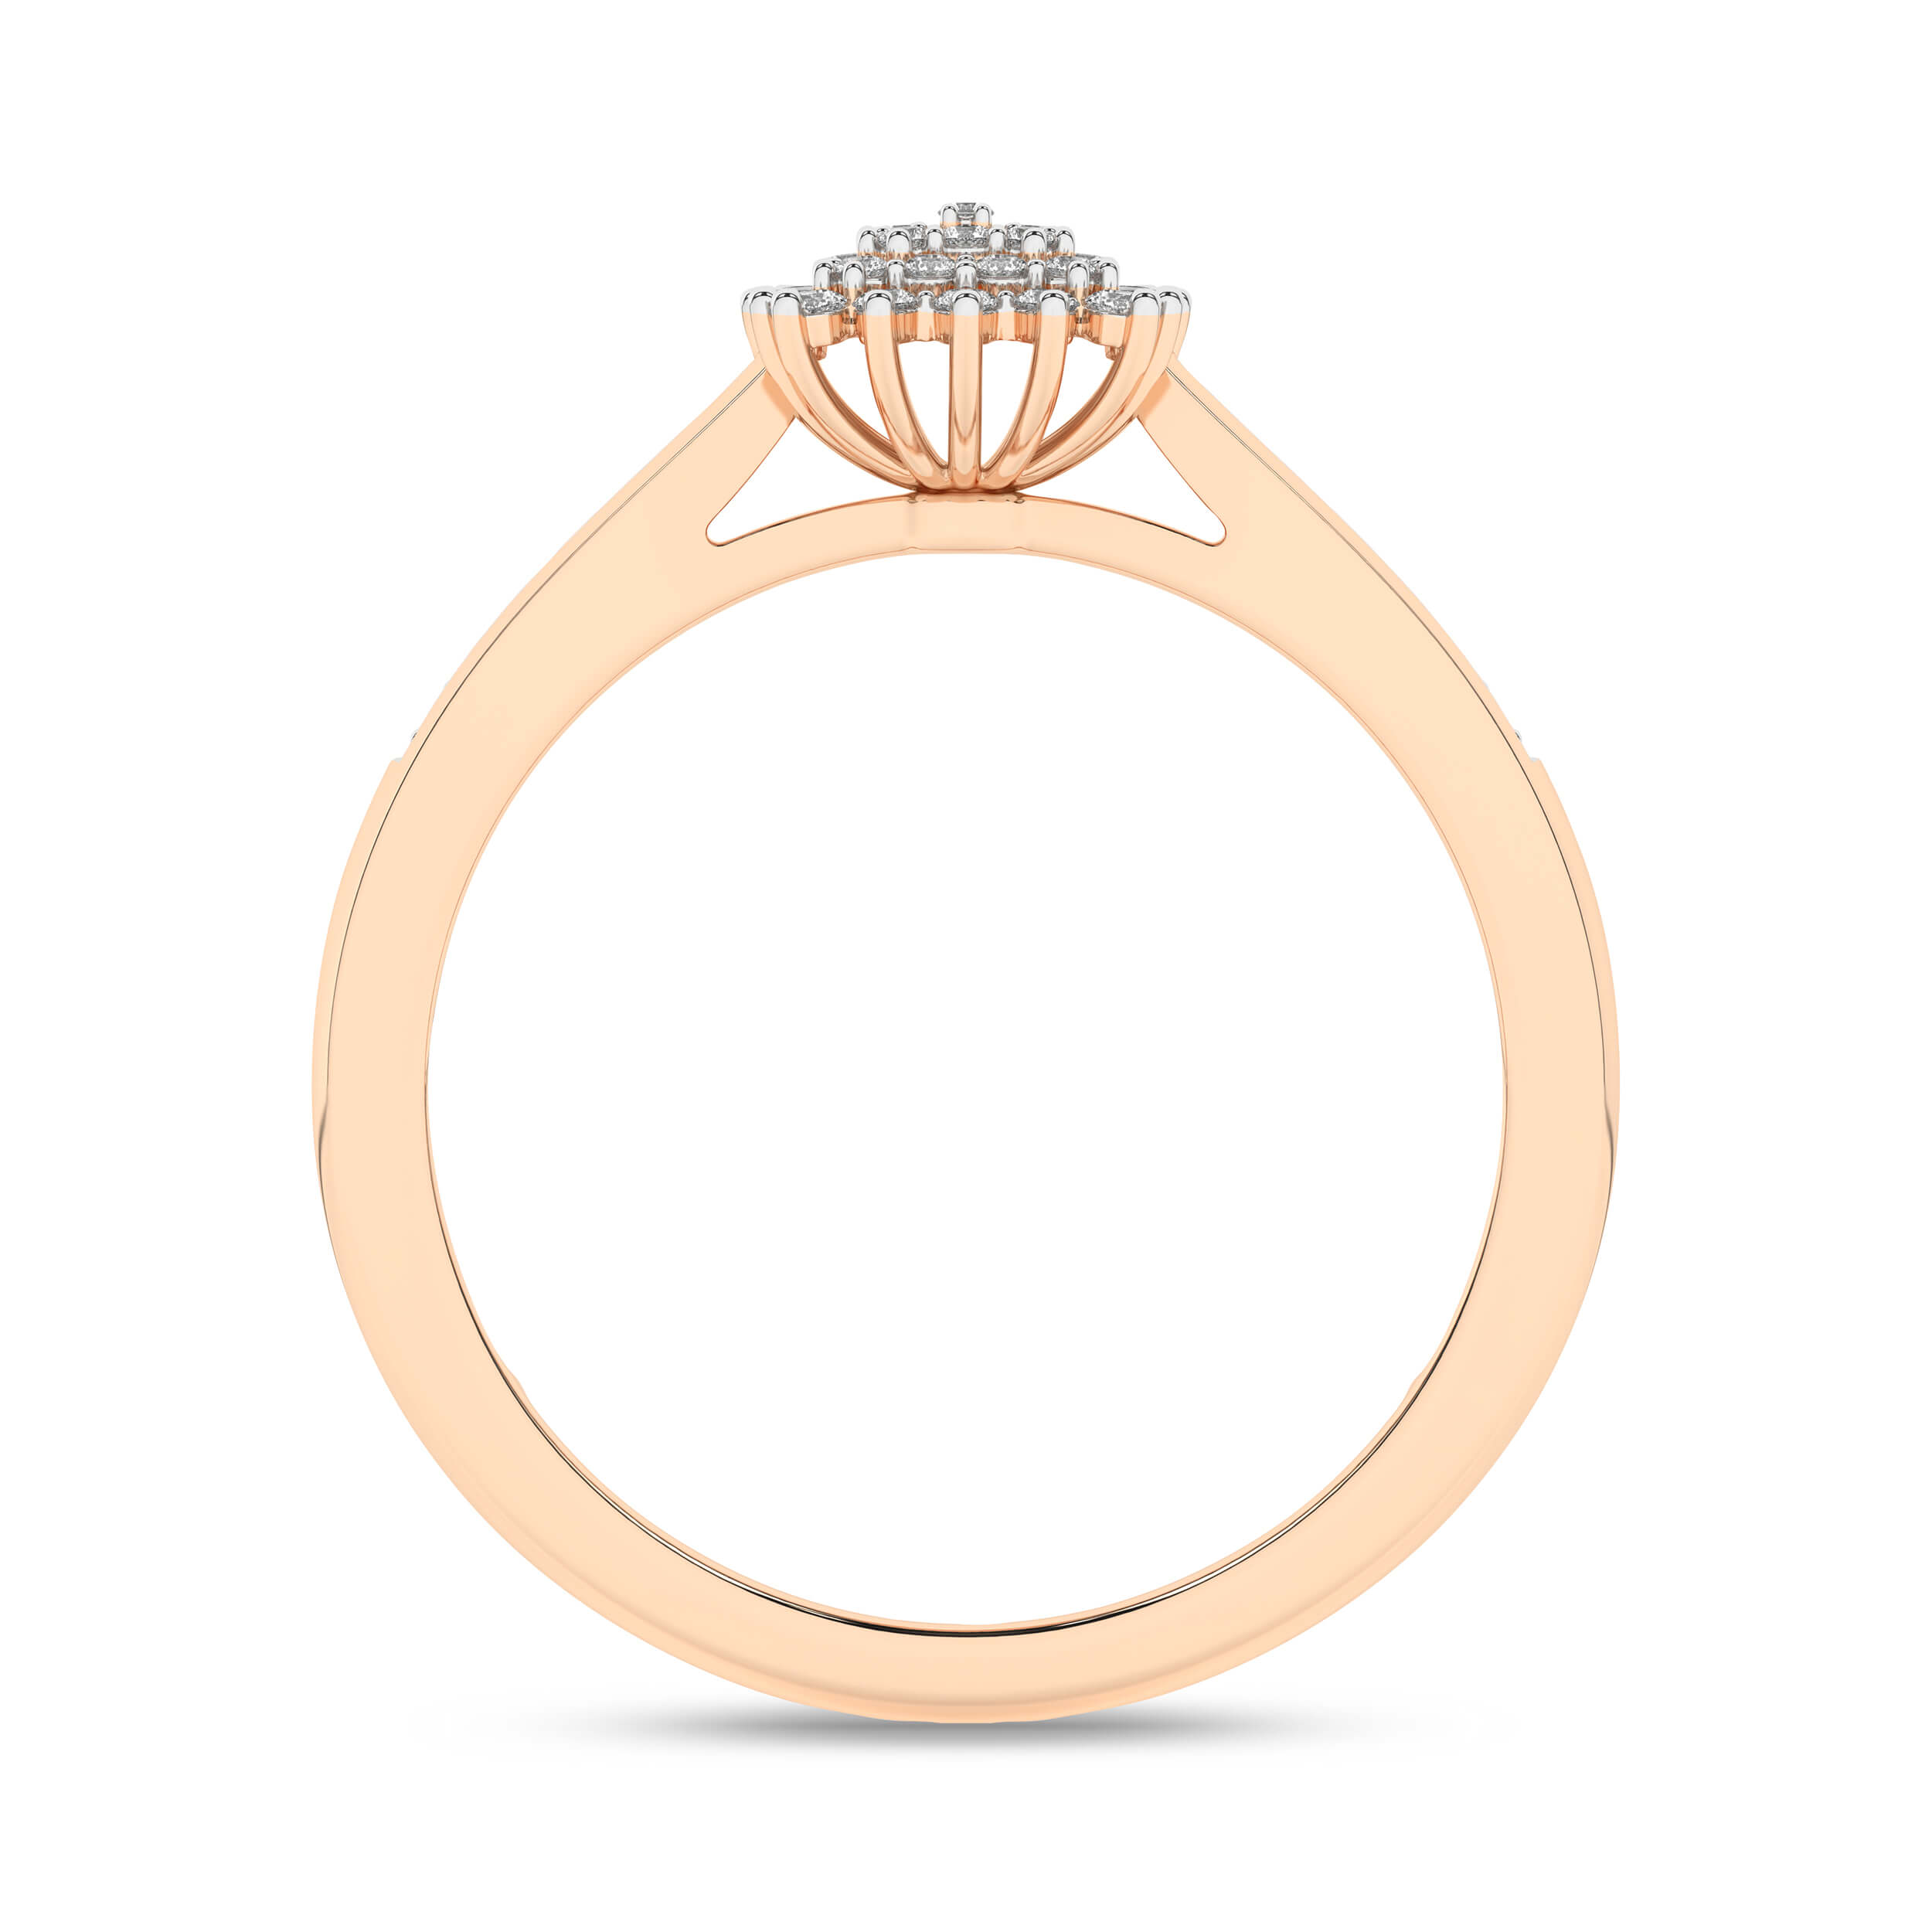 Inel din Aur Roz 14K cu Diamante 0.15Ct, articol RF17035, previzualizare foto 2